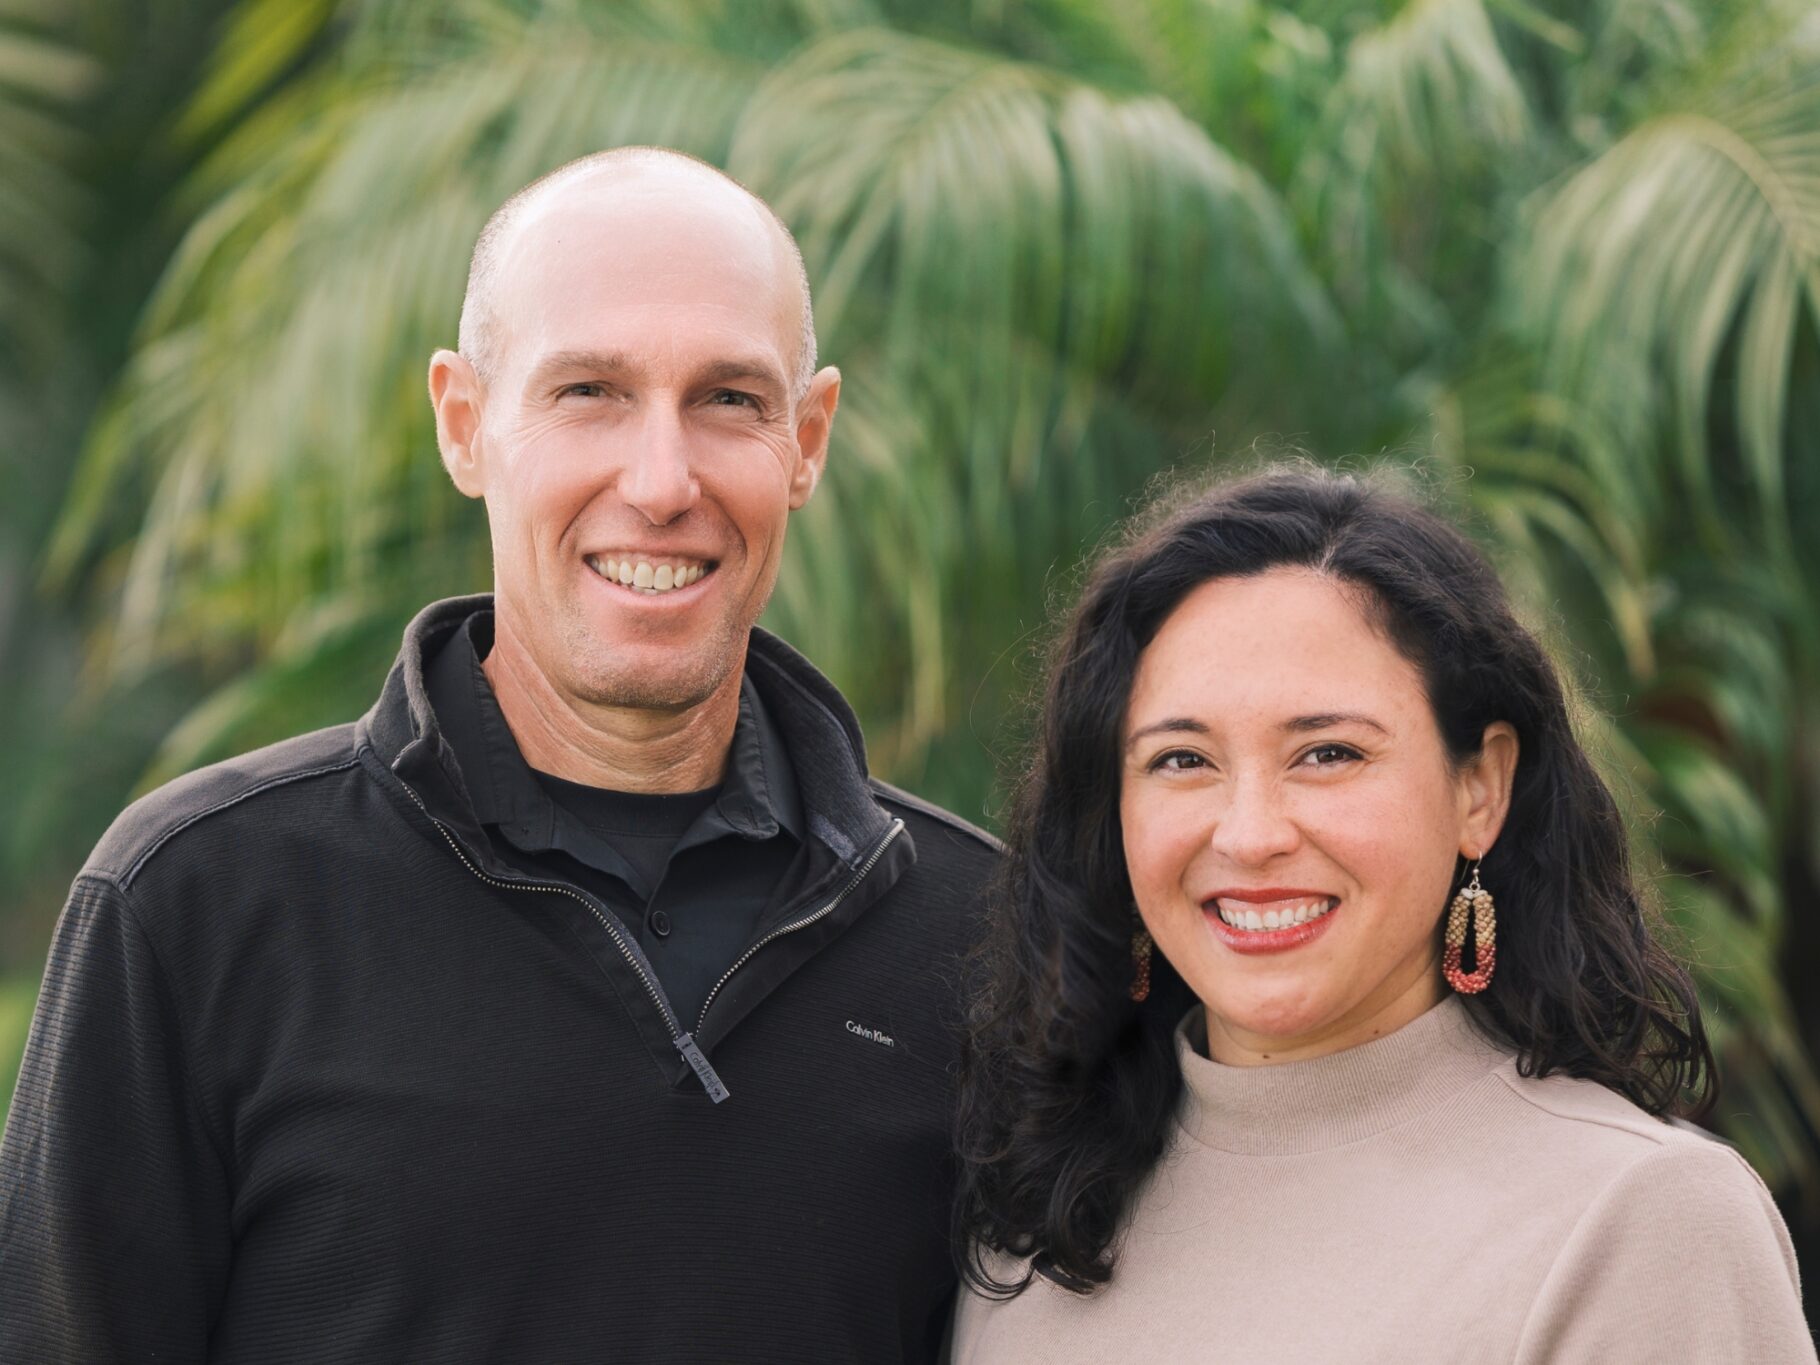 Mission Driven Finance Co-founders David Lynn and Lauren Grattan